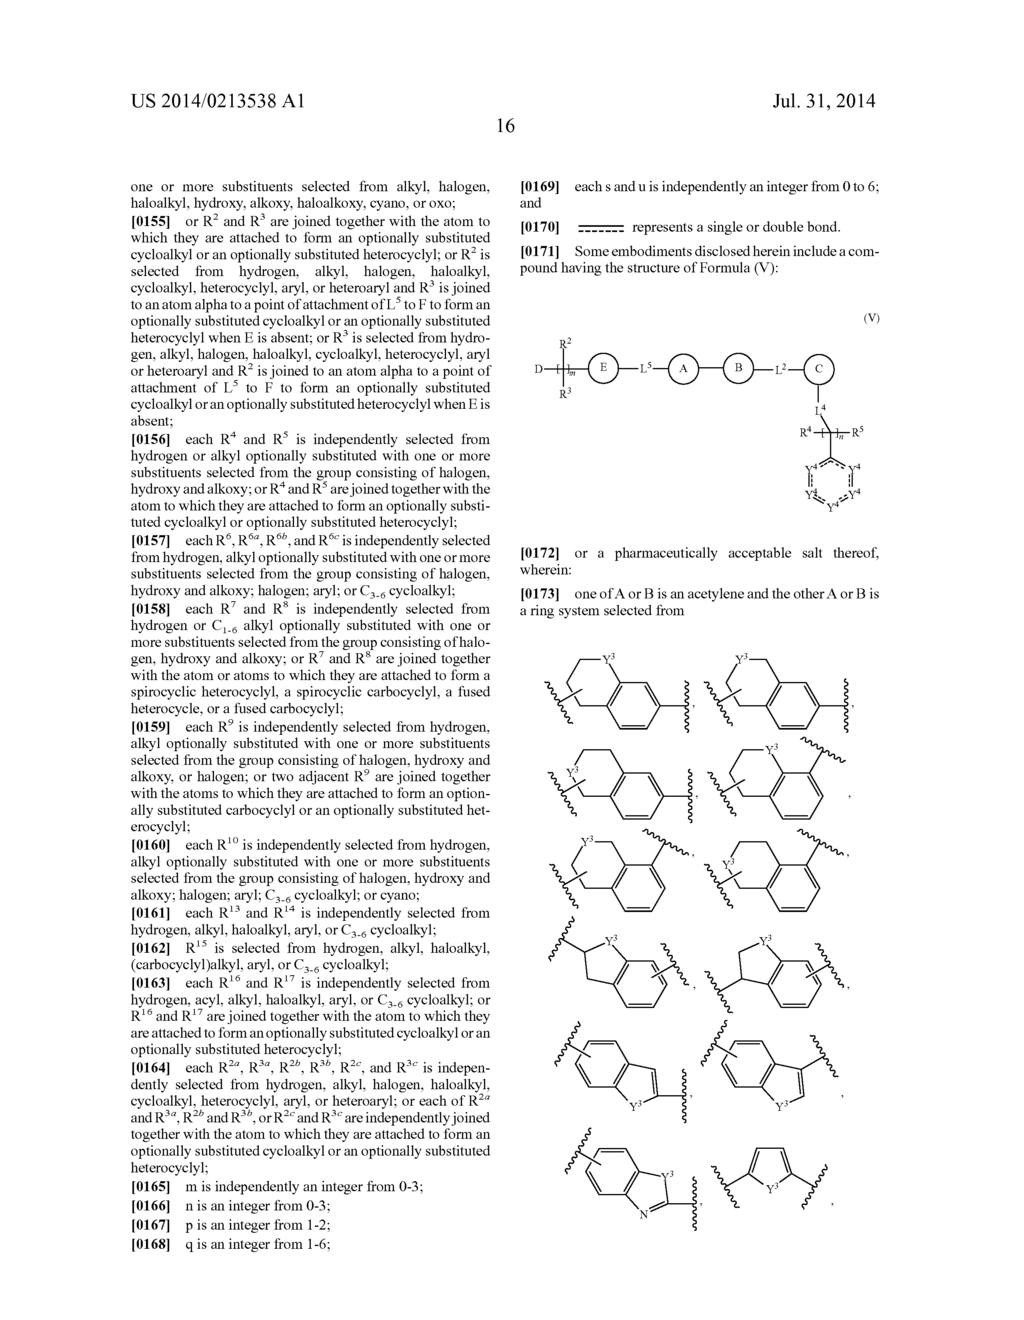 LYSOPHOSPHATIDIC ACID RECEPTOR ANTAGONISTS - diagram, schematic, and image 17